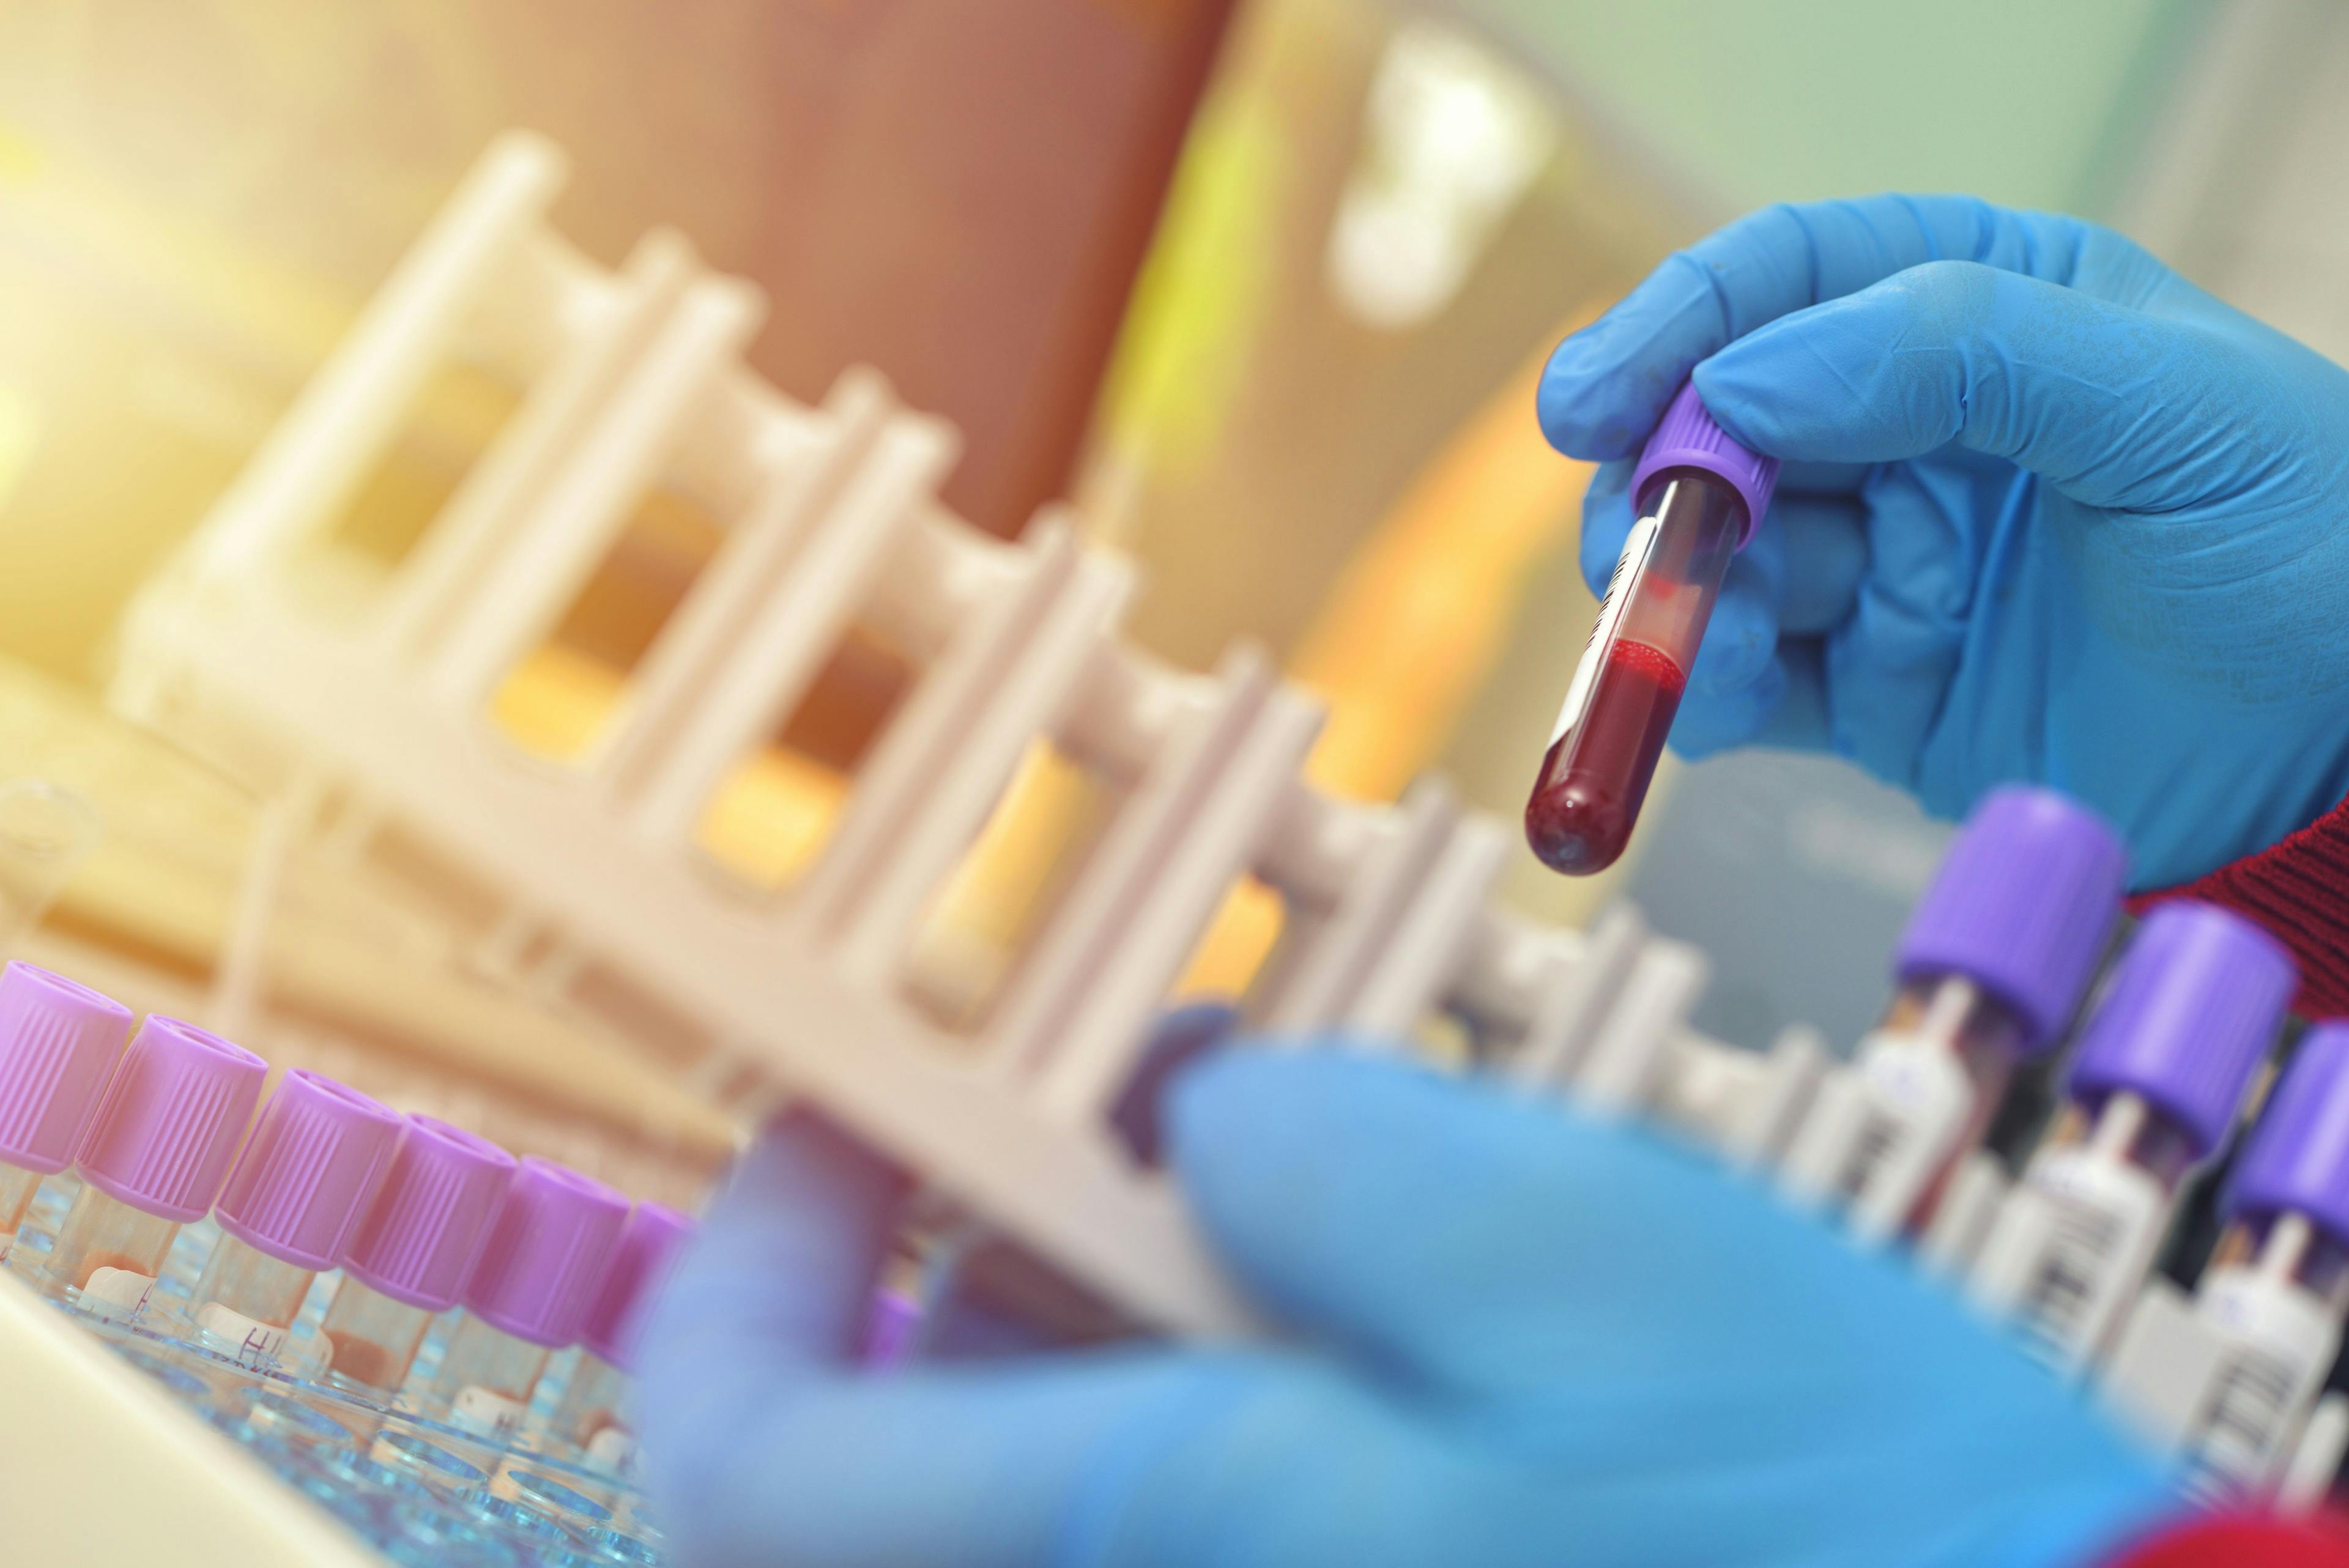 Tubes of blood sample for testing | Image credit: Daniel CHETRONI – stock.adobe.com